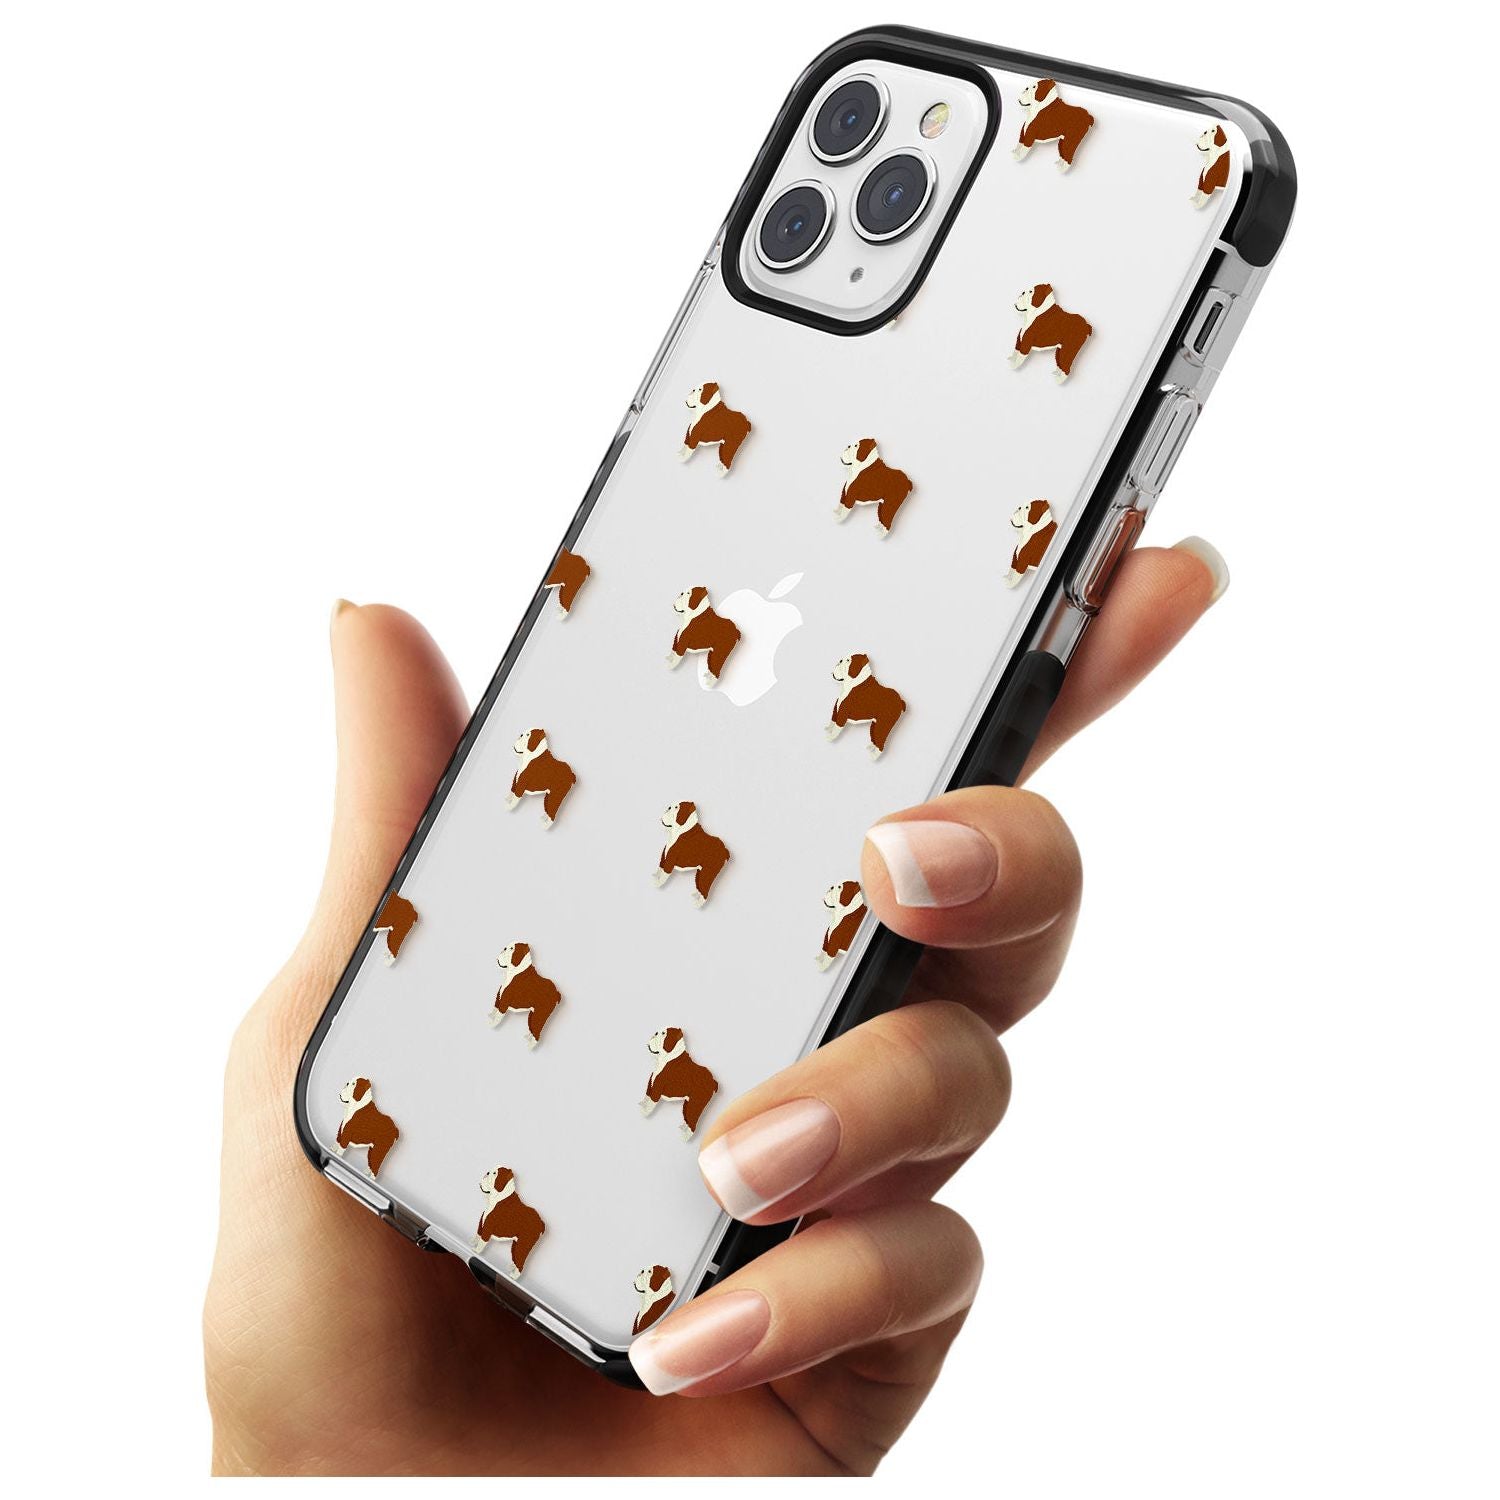 English Bulldog Dog Pattern Clear Black Impact Phone Case for iPhone 11 Pro Max